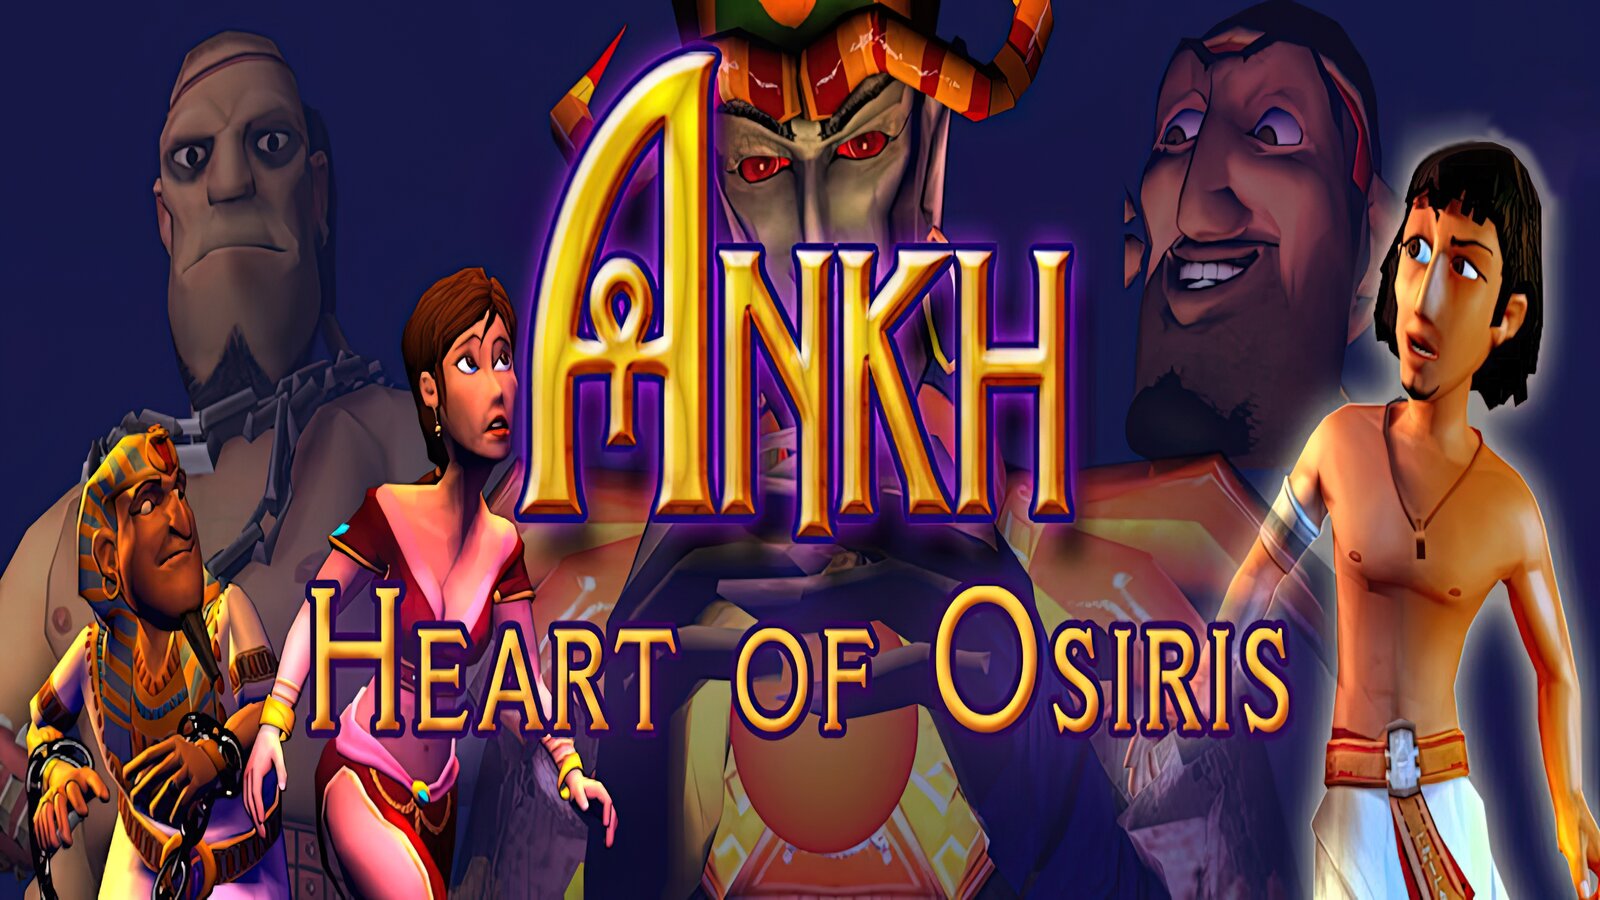 Ankh 2: Heart of Osiris